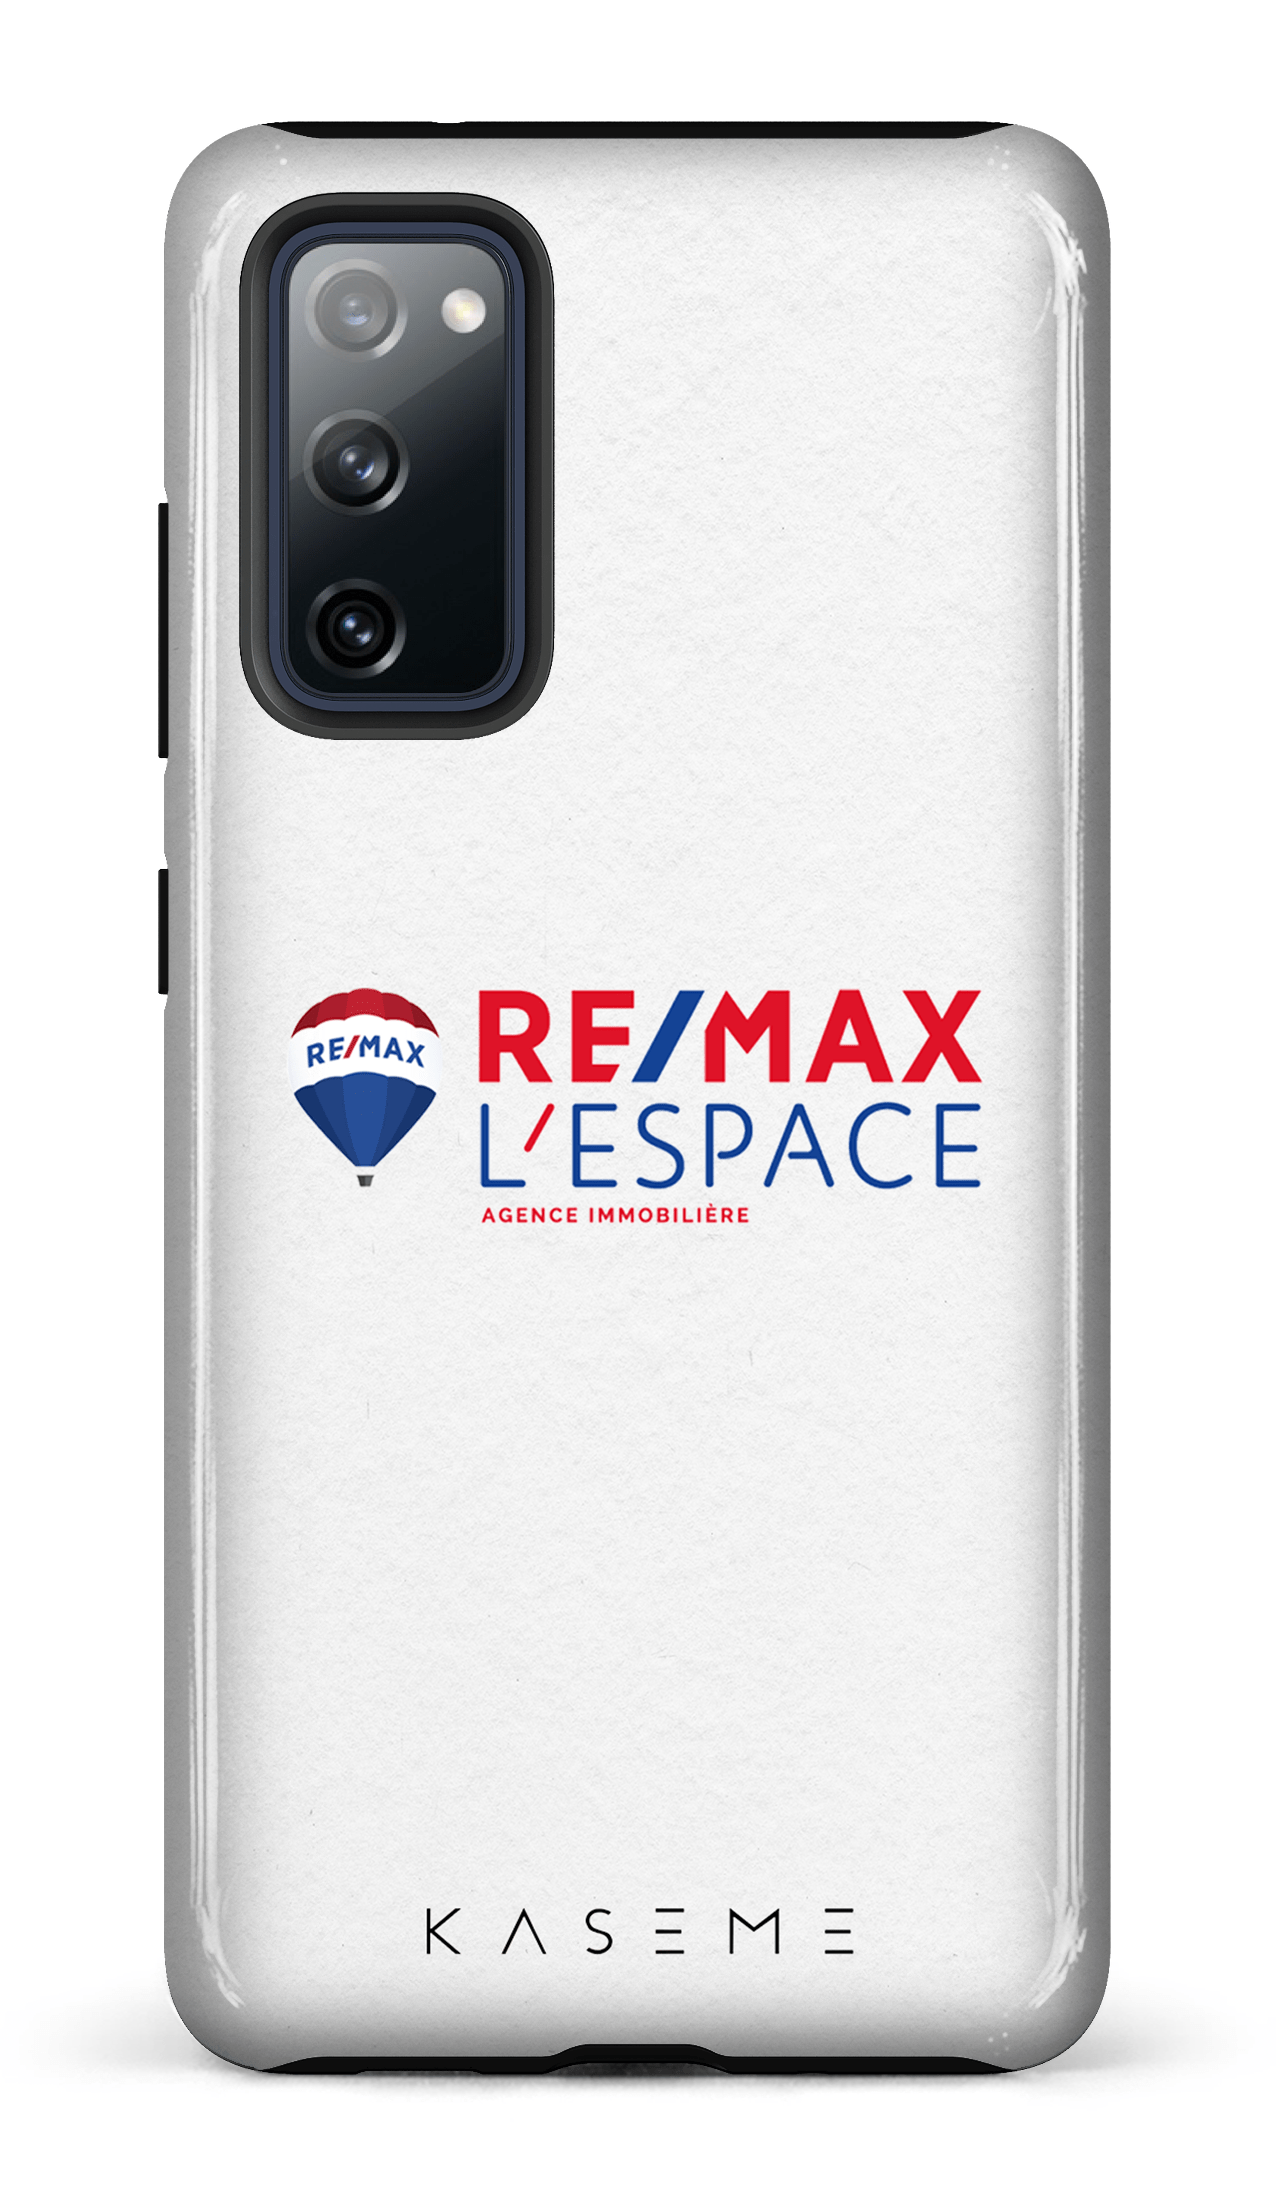 Remax L'Espace Blanc - Galaxy S20 FE